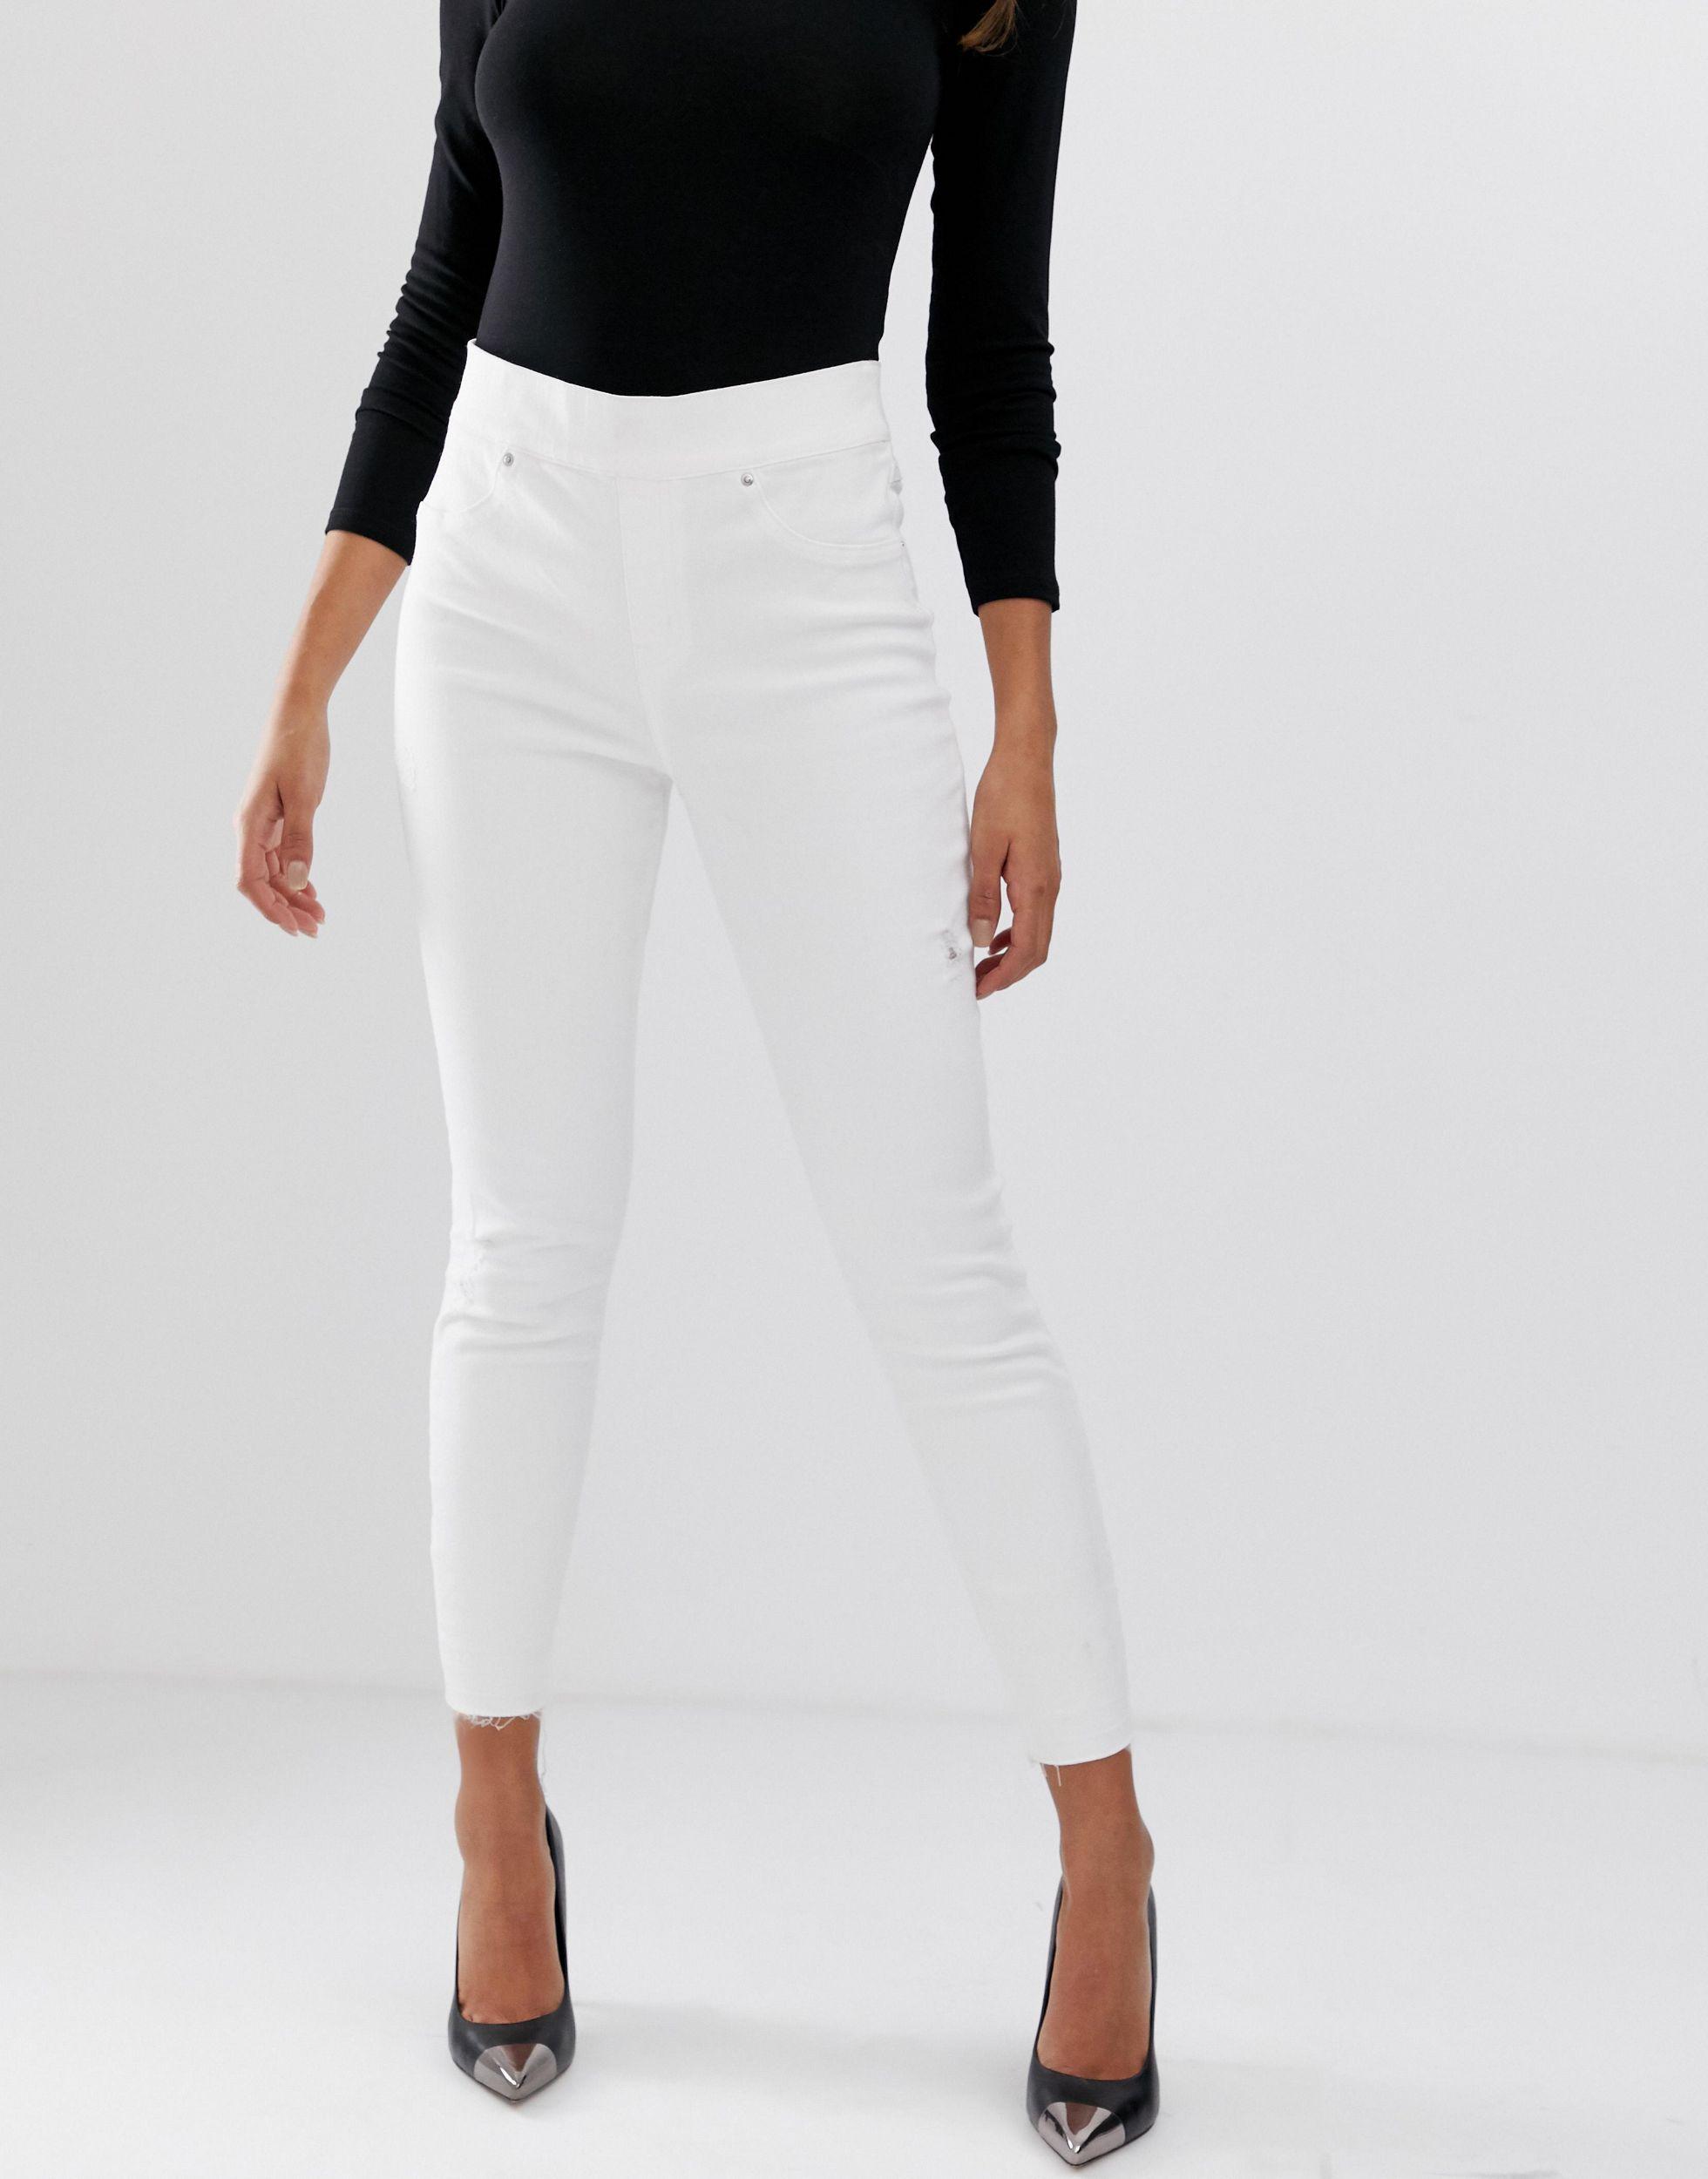 https://cdna.lystit.com/photos/asos/bbd50515/spanx-White-Shape-And-Lift-Distressed-Skinny-Jeans.jpeg